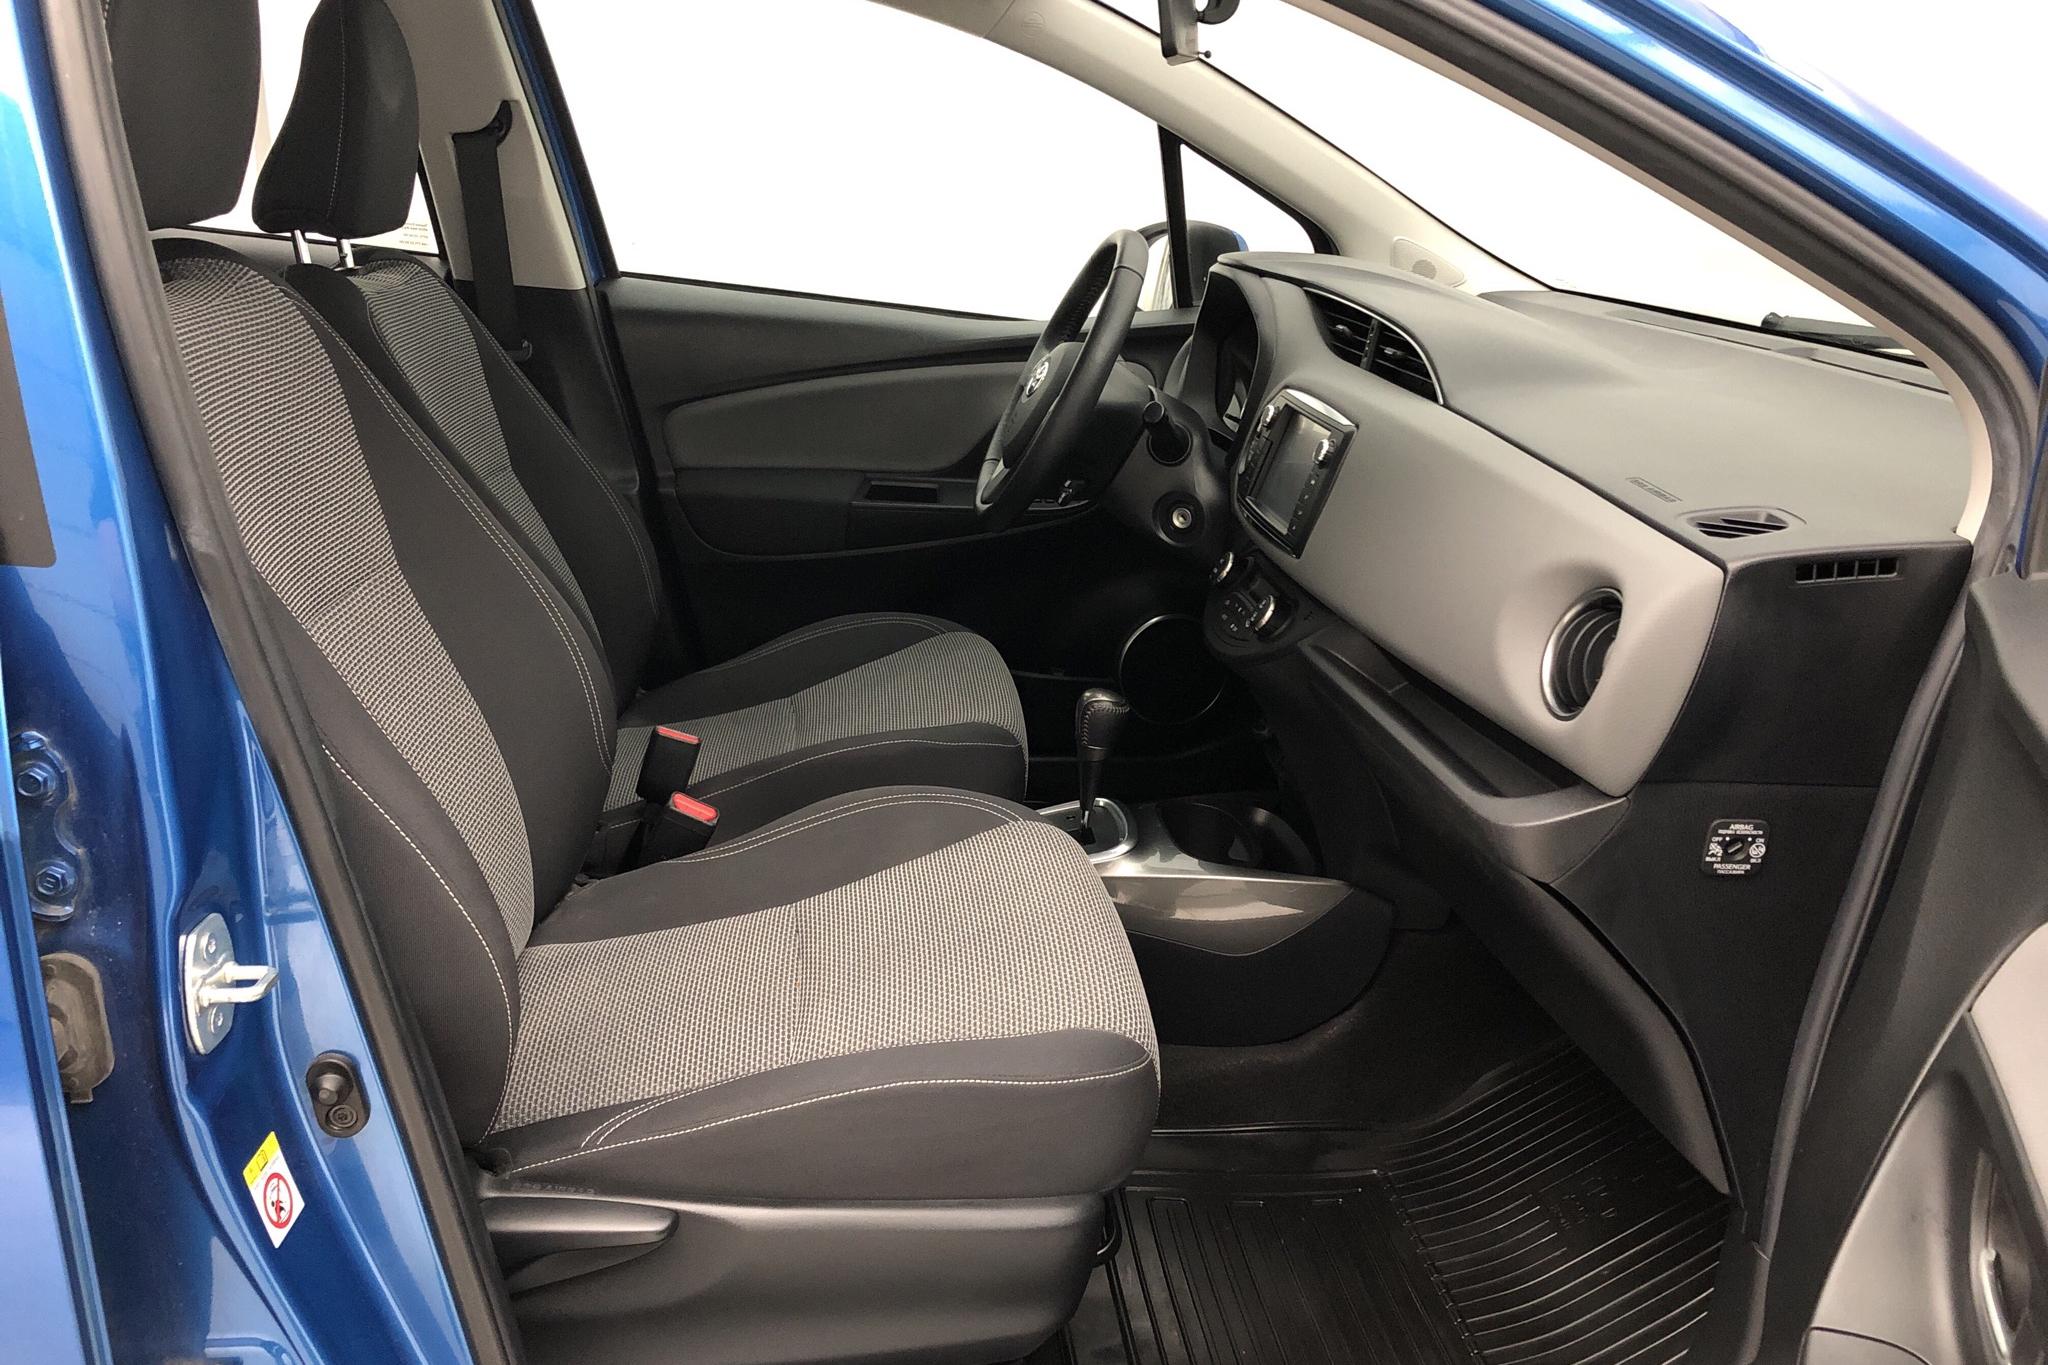 Toyota Yaris 1.5 HSD 5dr (75hk) - 49 090 km - Automatic - blue - 2015